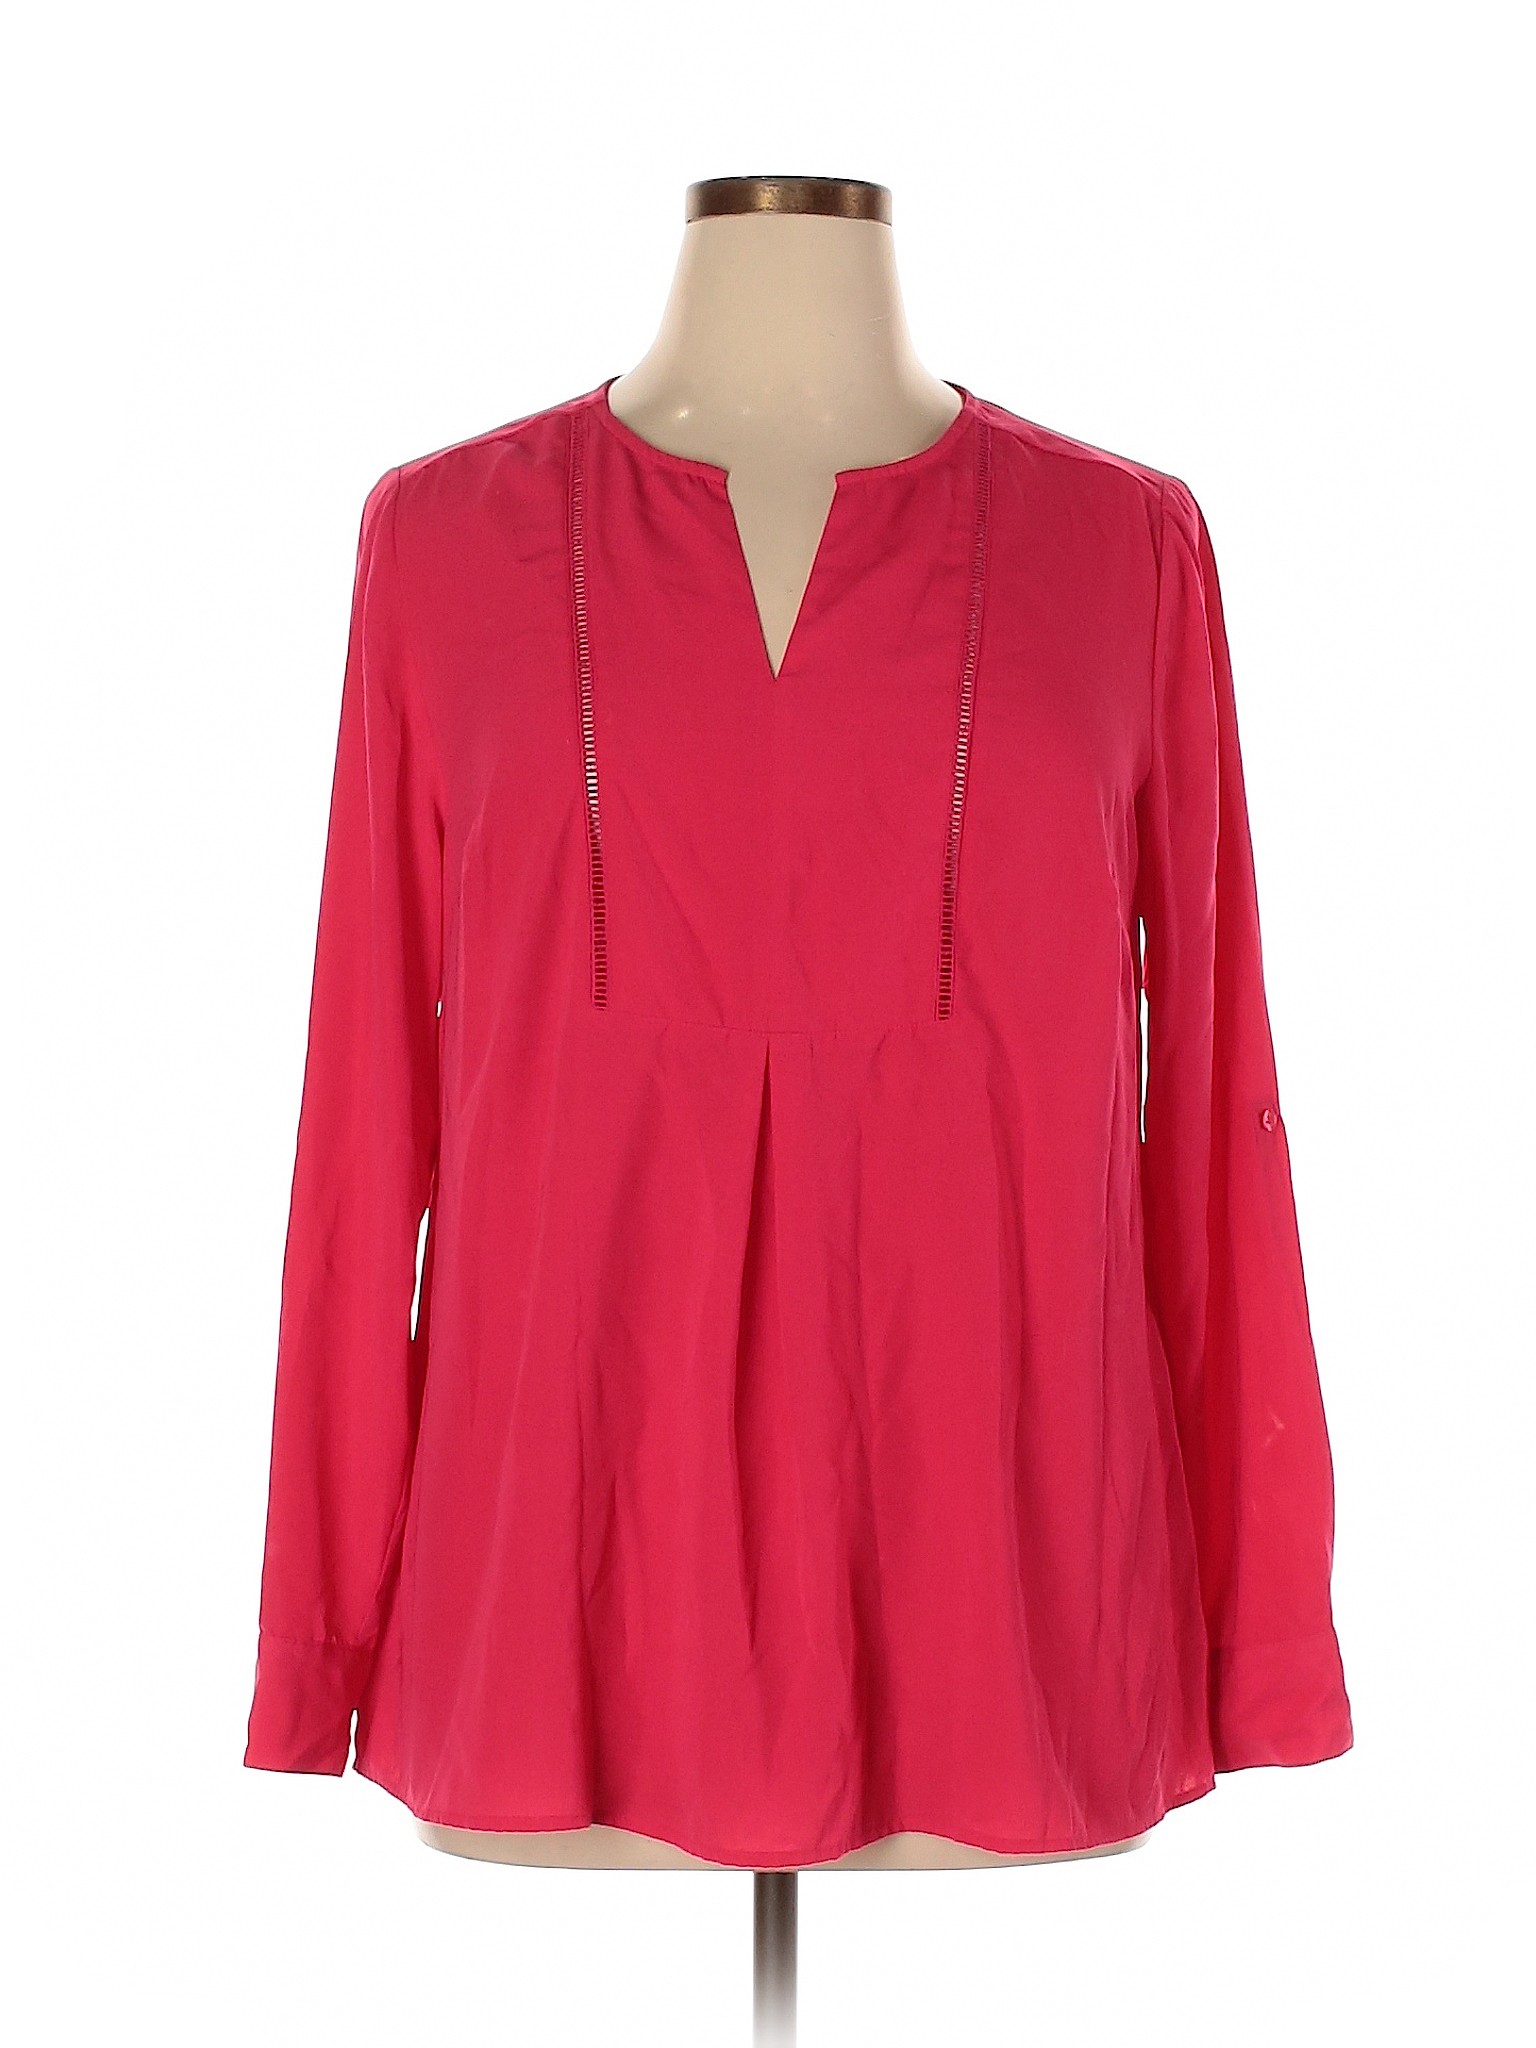 Lane Bryant Women Red Long Sleeve Blouse 14 Plus | eBay